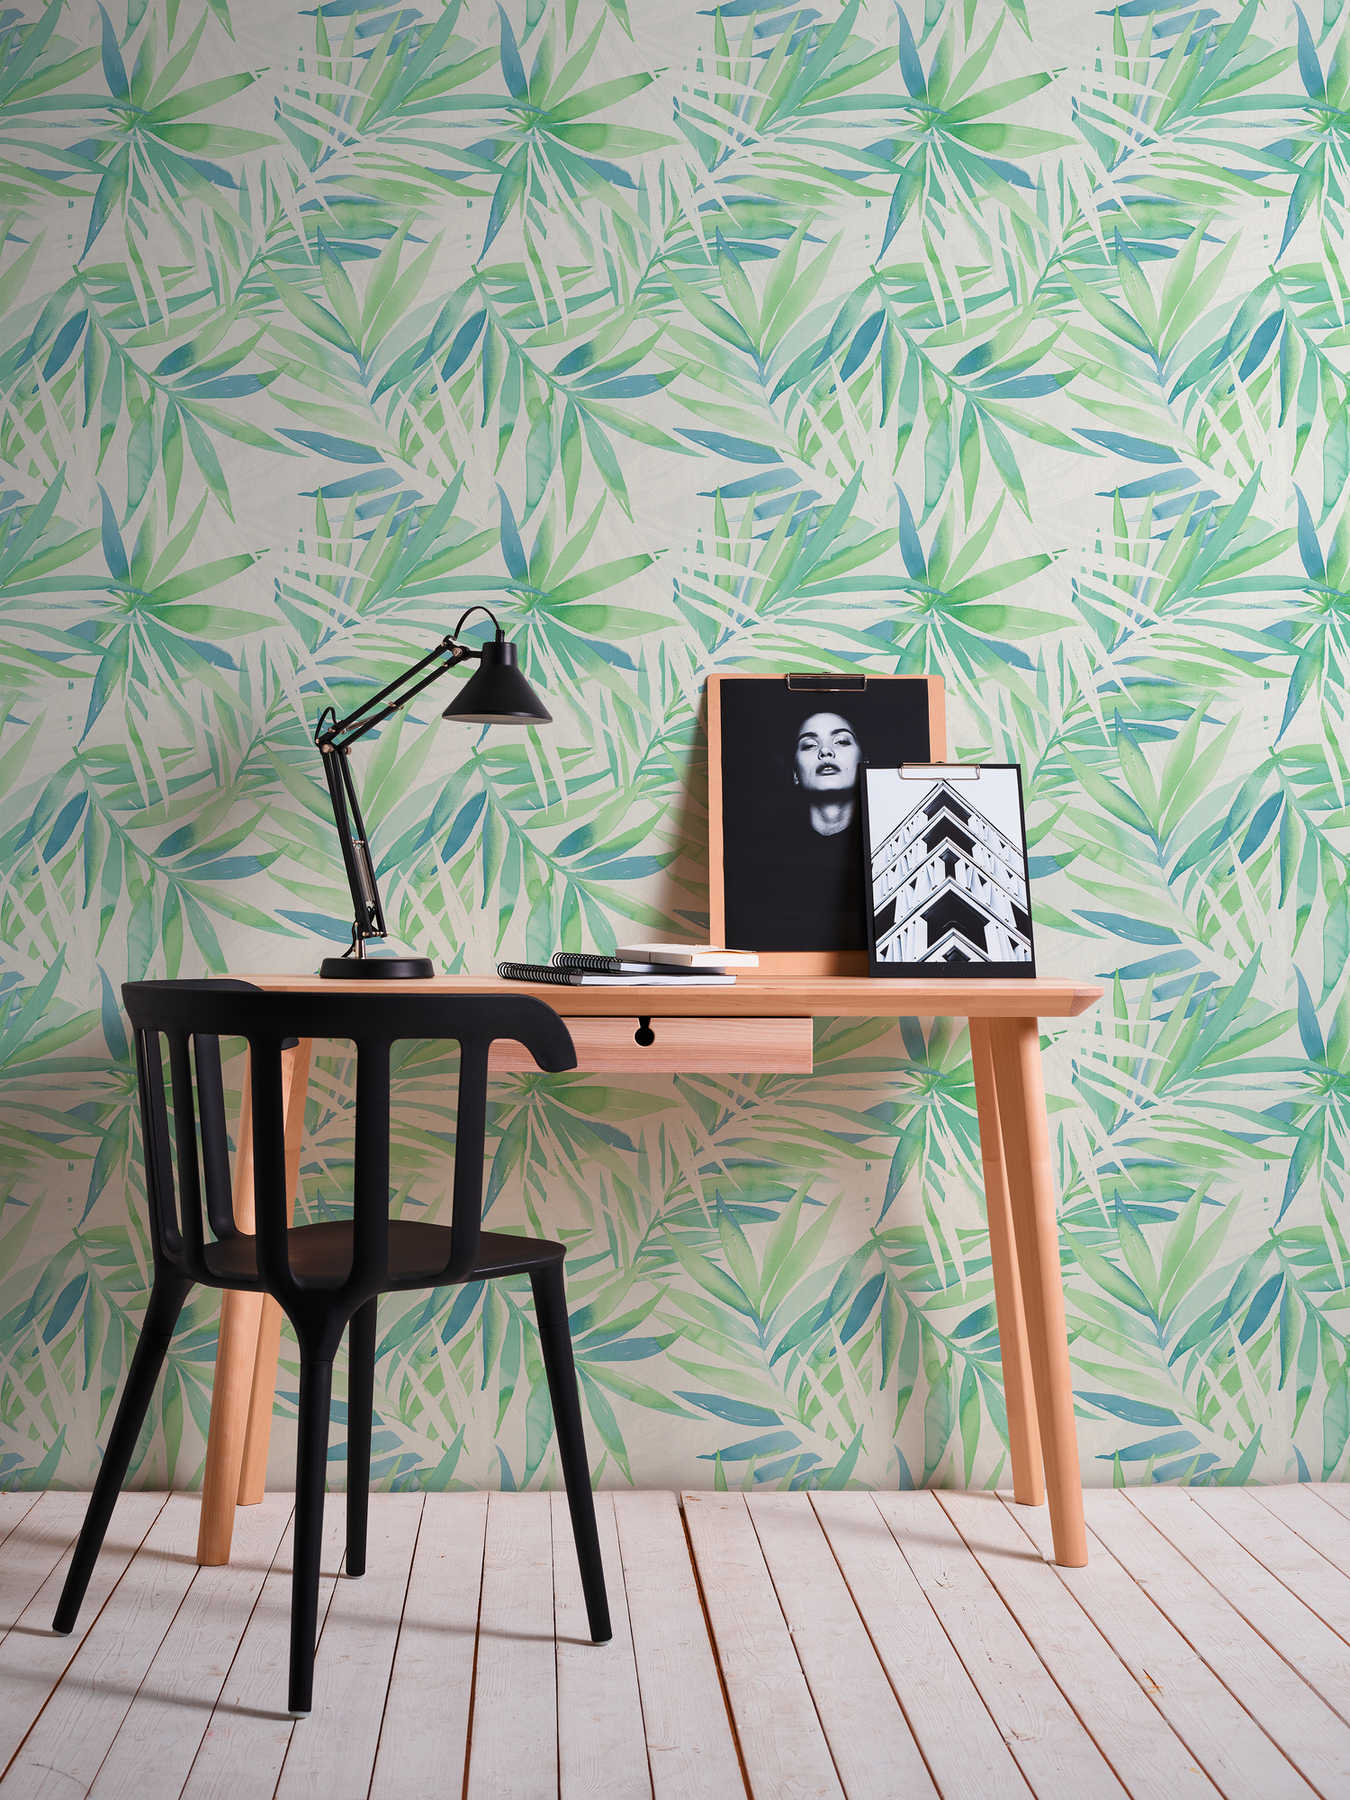             Dschungel Tapete Blättermotiv im Aquarell Stil – Grün
        